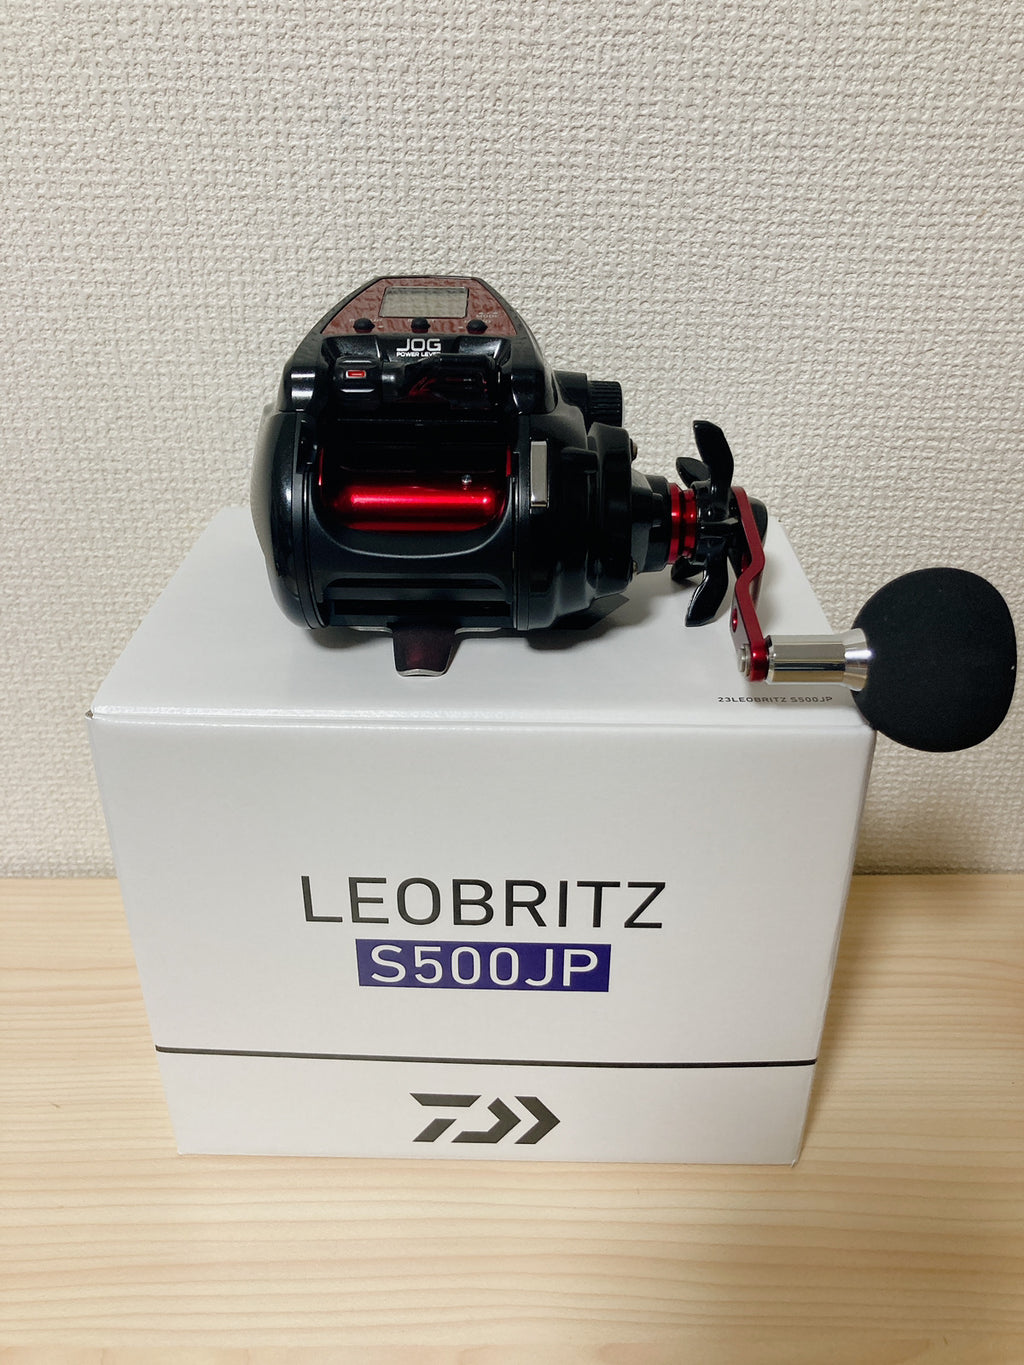 Daiwa 23 Leobritz S500JP (Right Handle)